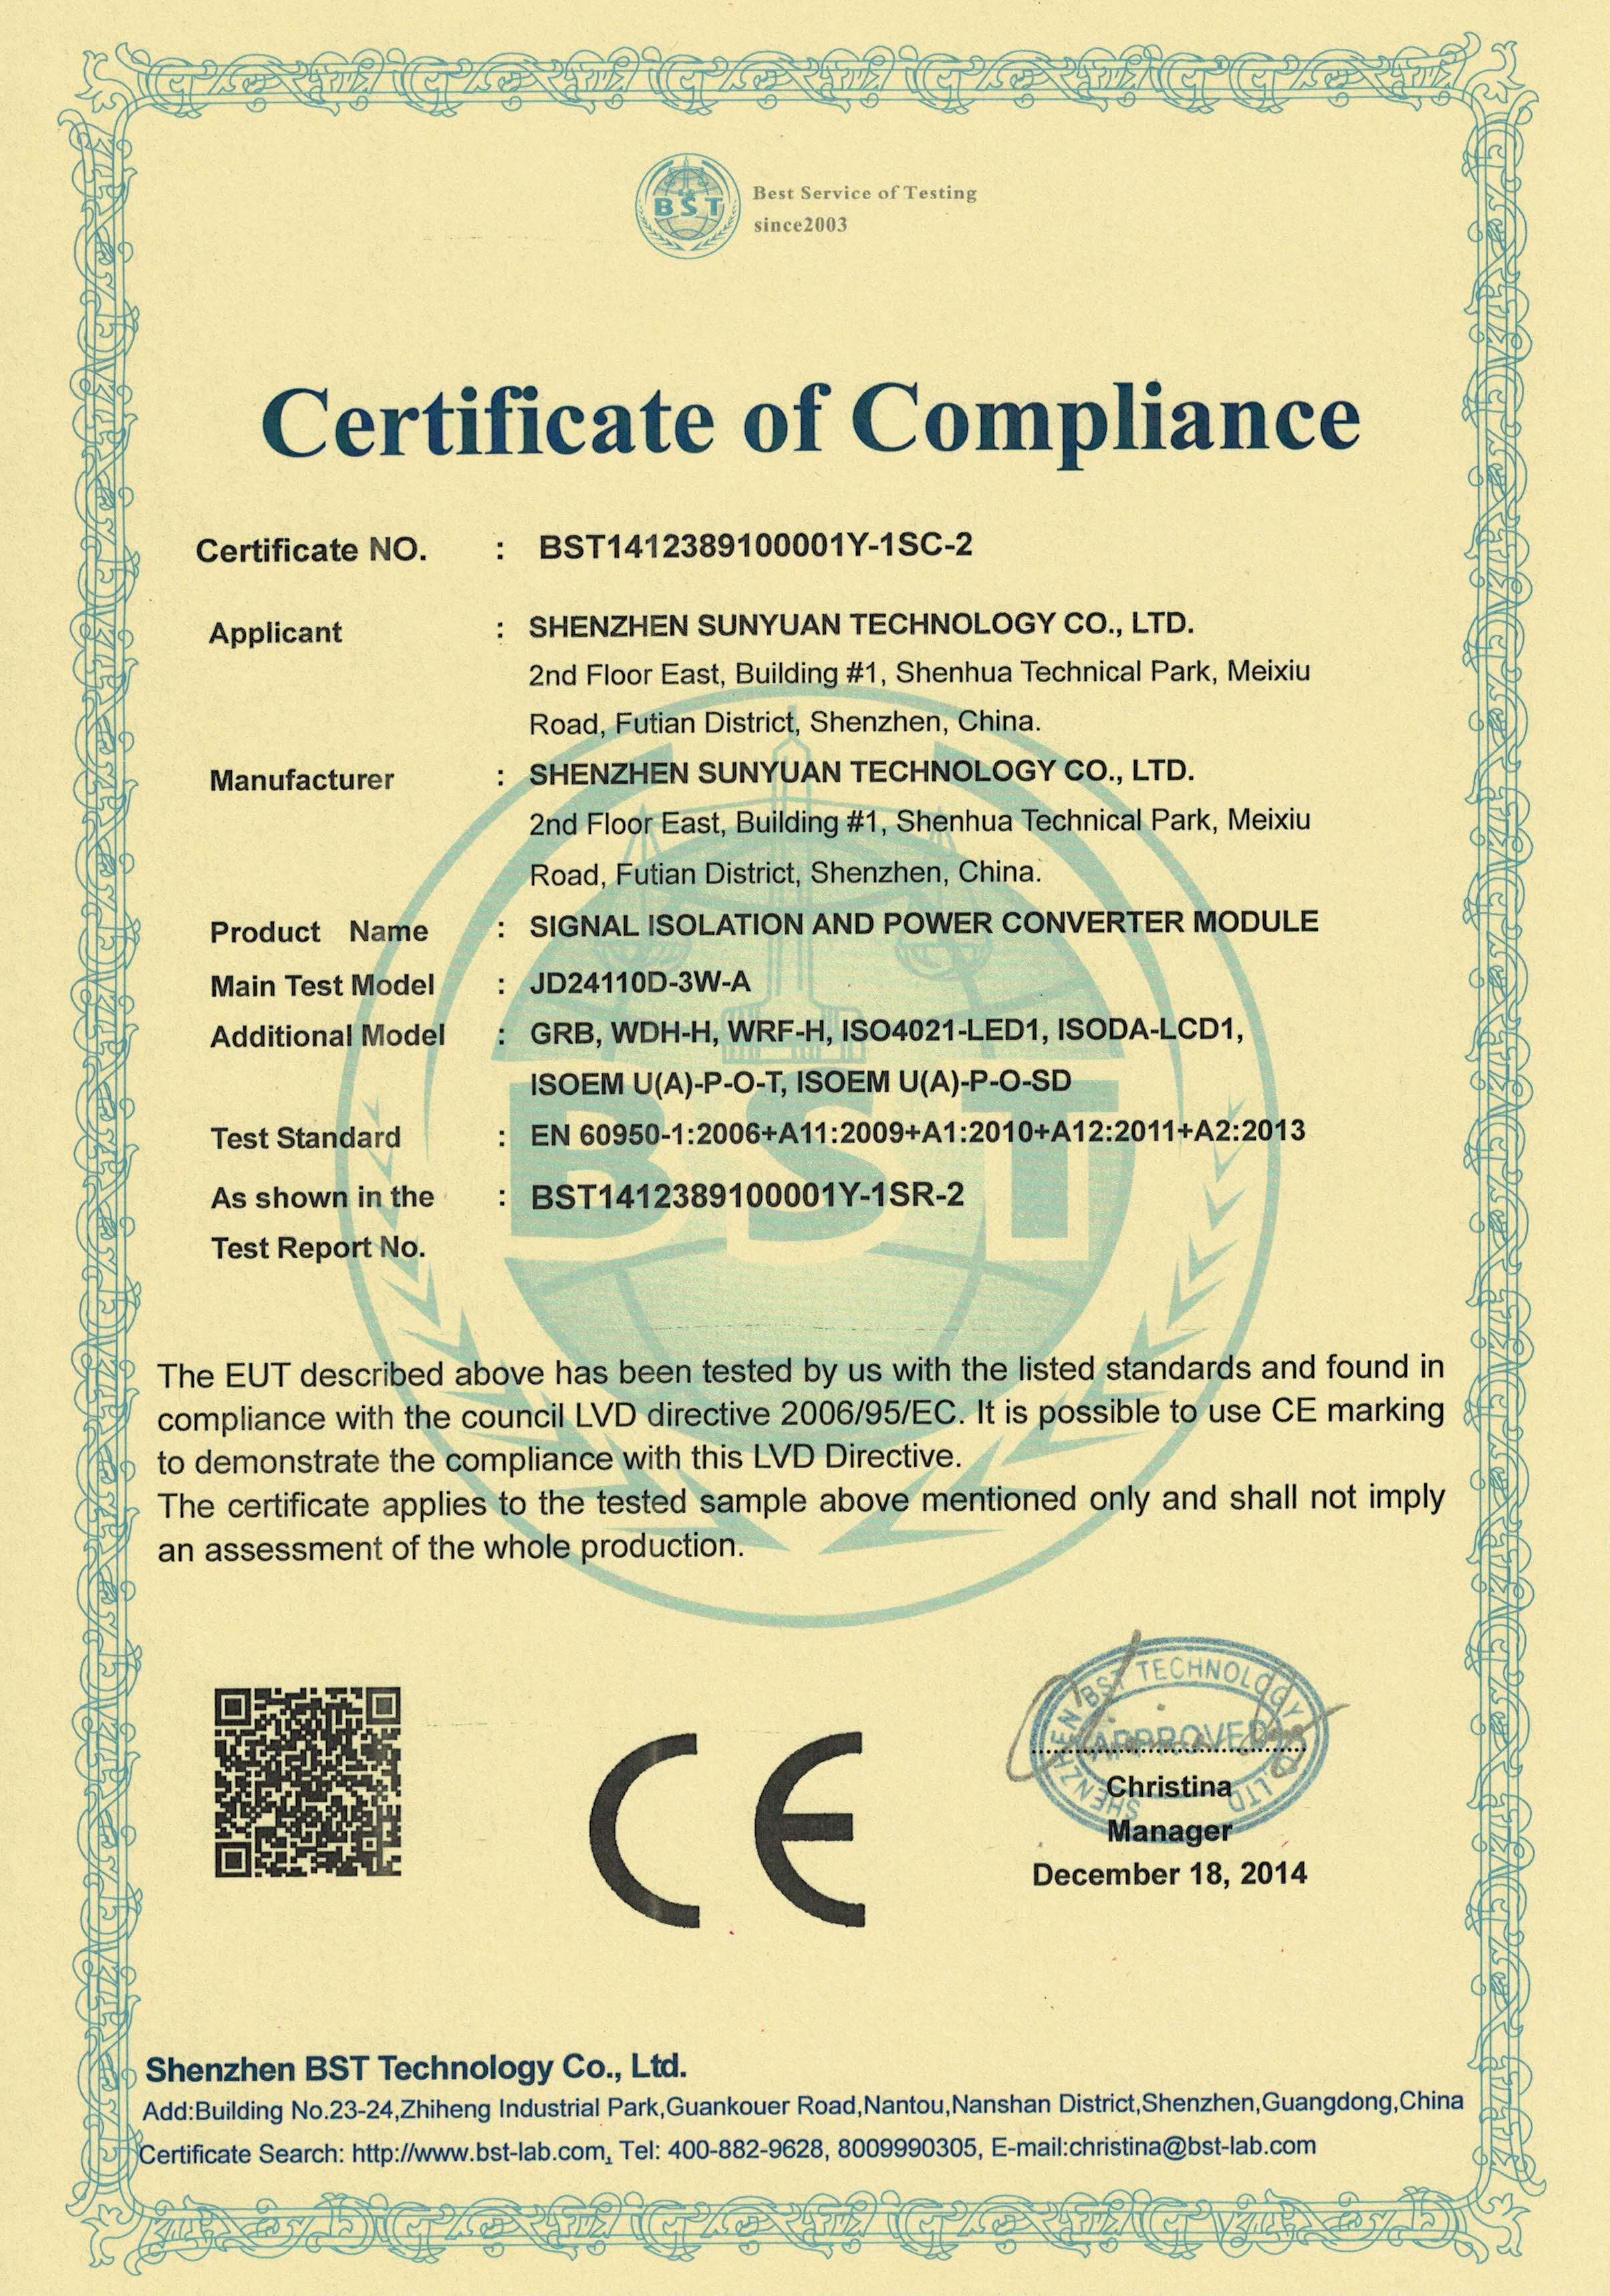 6.CE certification for medical instrumentation equipment (2014-12-18)